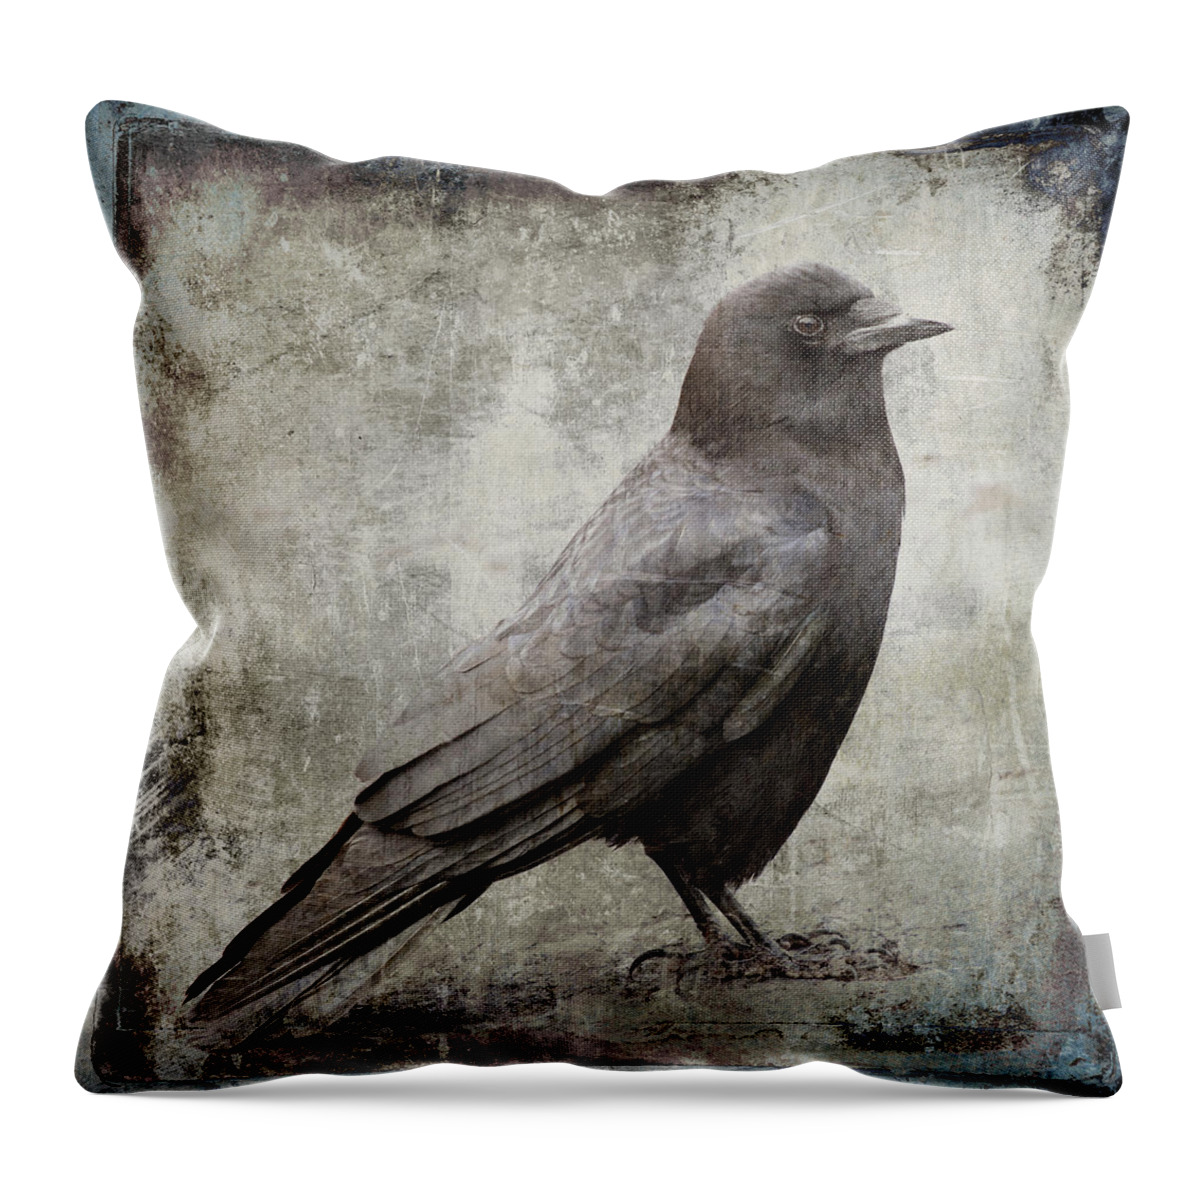 Crow Throw Pillow featuring the photograph Coastal Crow by Carol Leigh